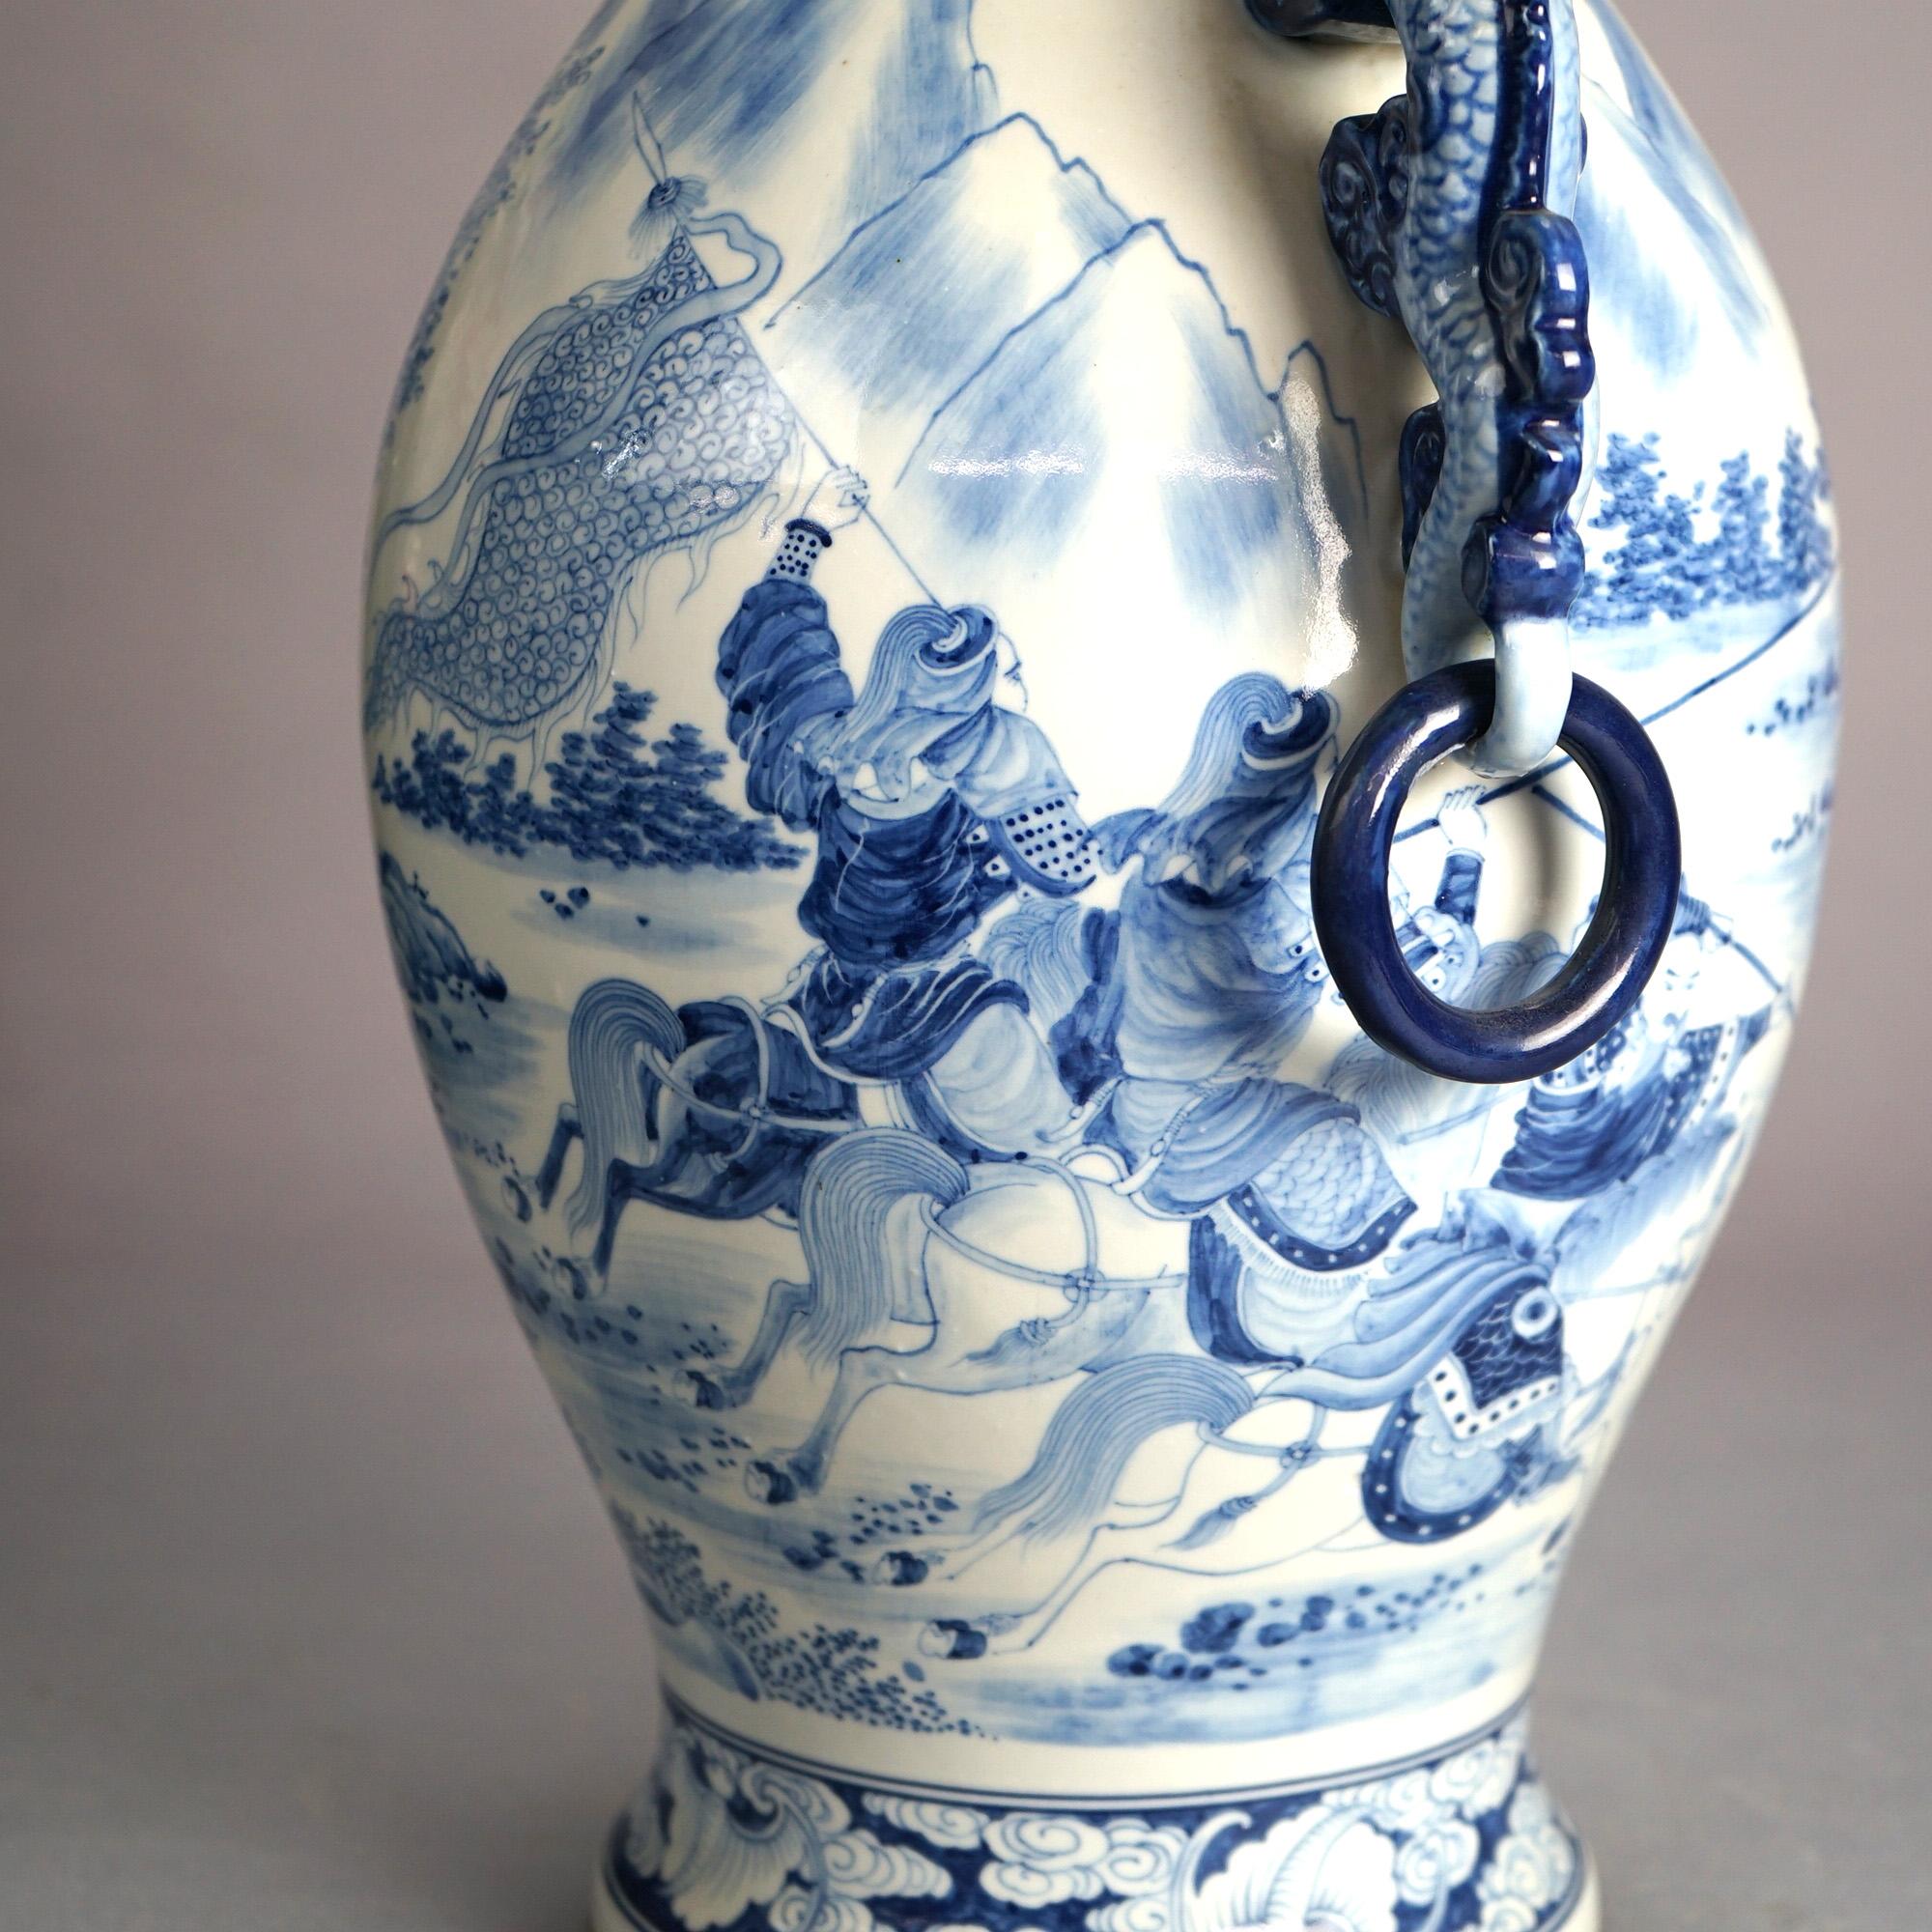 Large Chinese Blue & White Porcelain Vase with Figural Dragon Handles, Horseback Warrior & Longqing Mark 20thC

Measures- 16.75''H x 12''W x 8.5''D